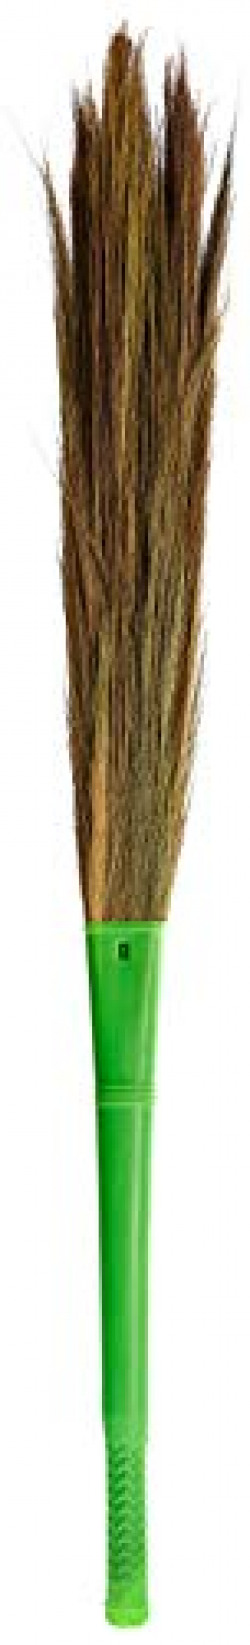 Polyguards Premium Grass Broom (Green)